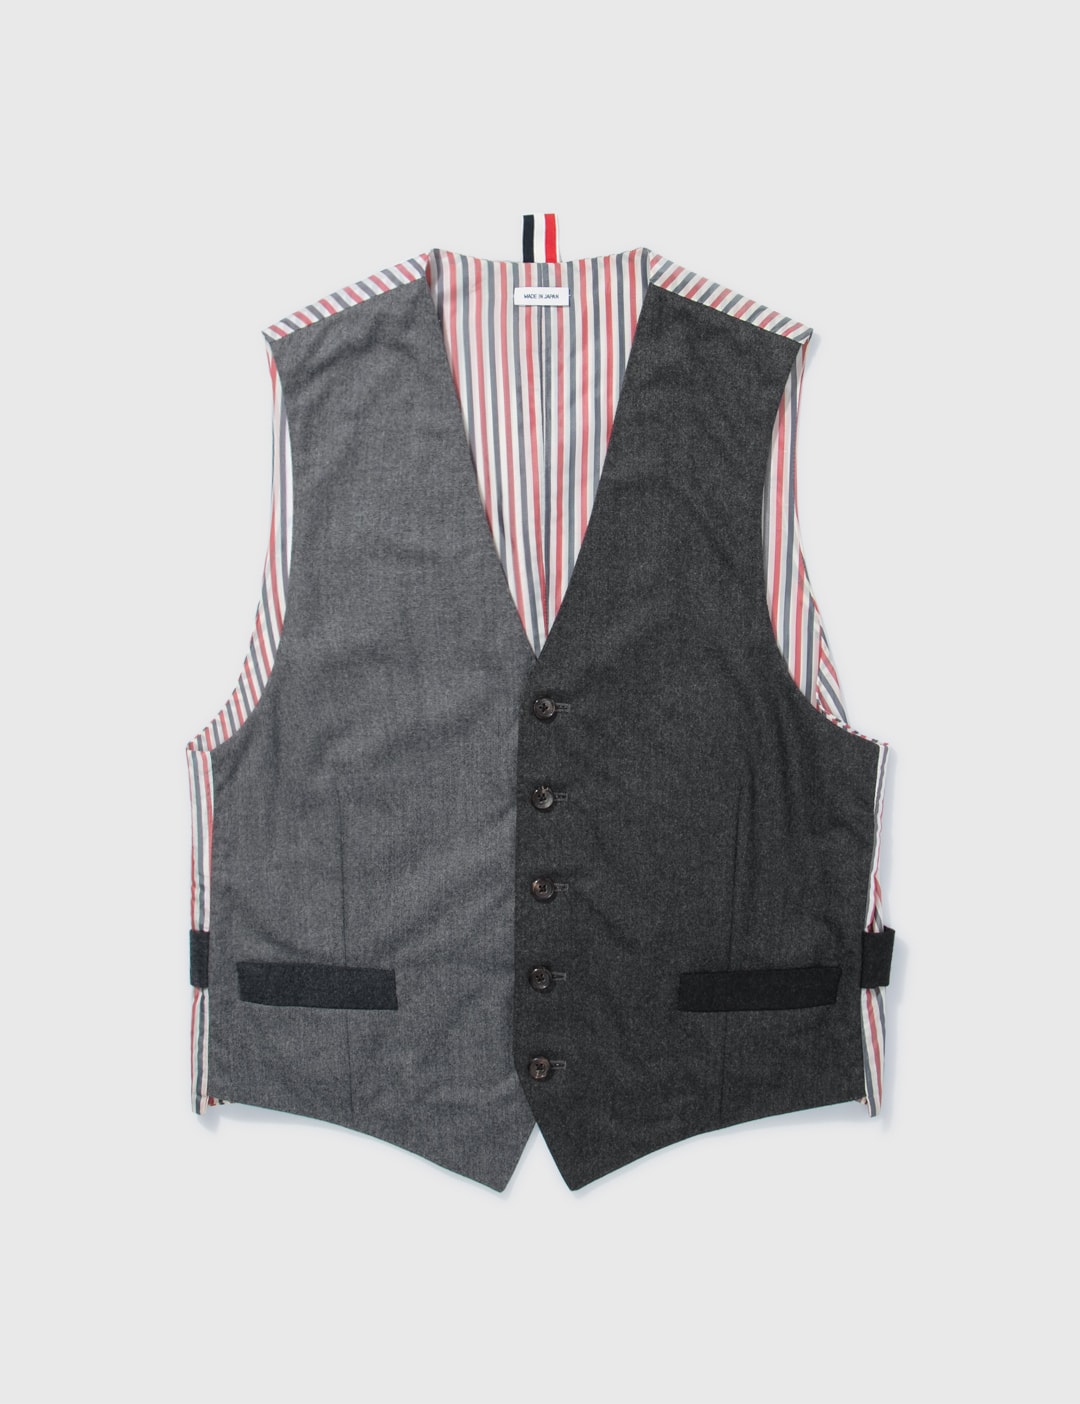 Louis Vuitton Fragment Design Pocketed Vest